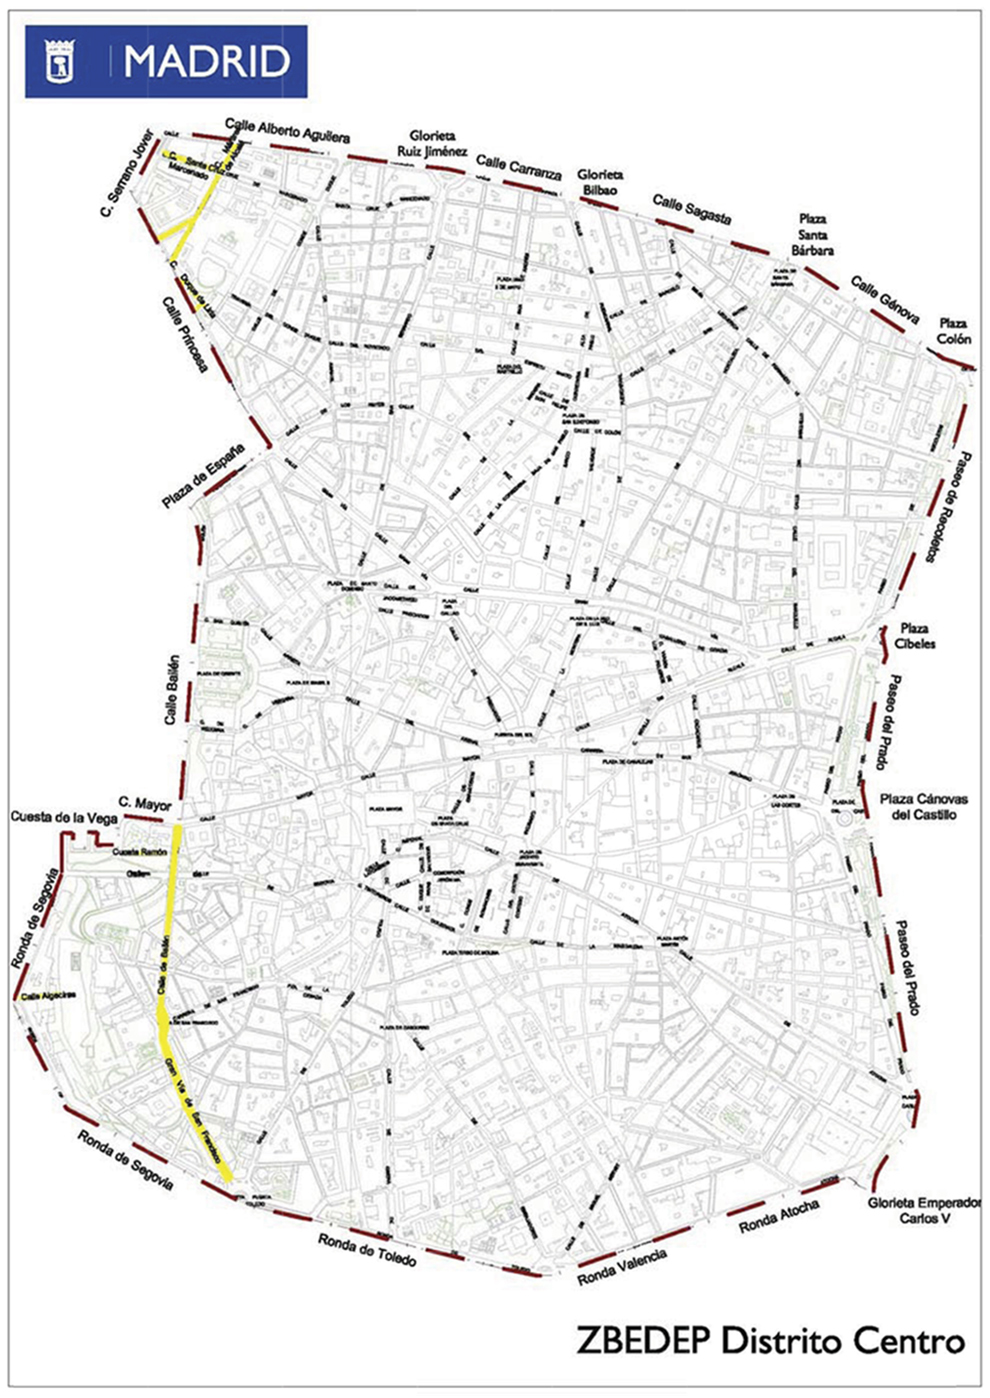 Madrid 360 - Madrid Central - mapa - ZBEDEP - zona de bajas emisiones - Distrito Centro  - Plaza Eliptica